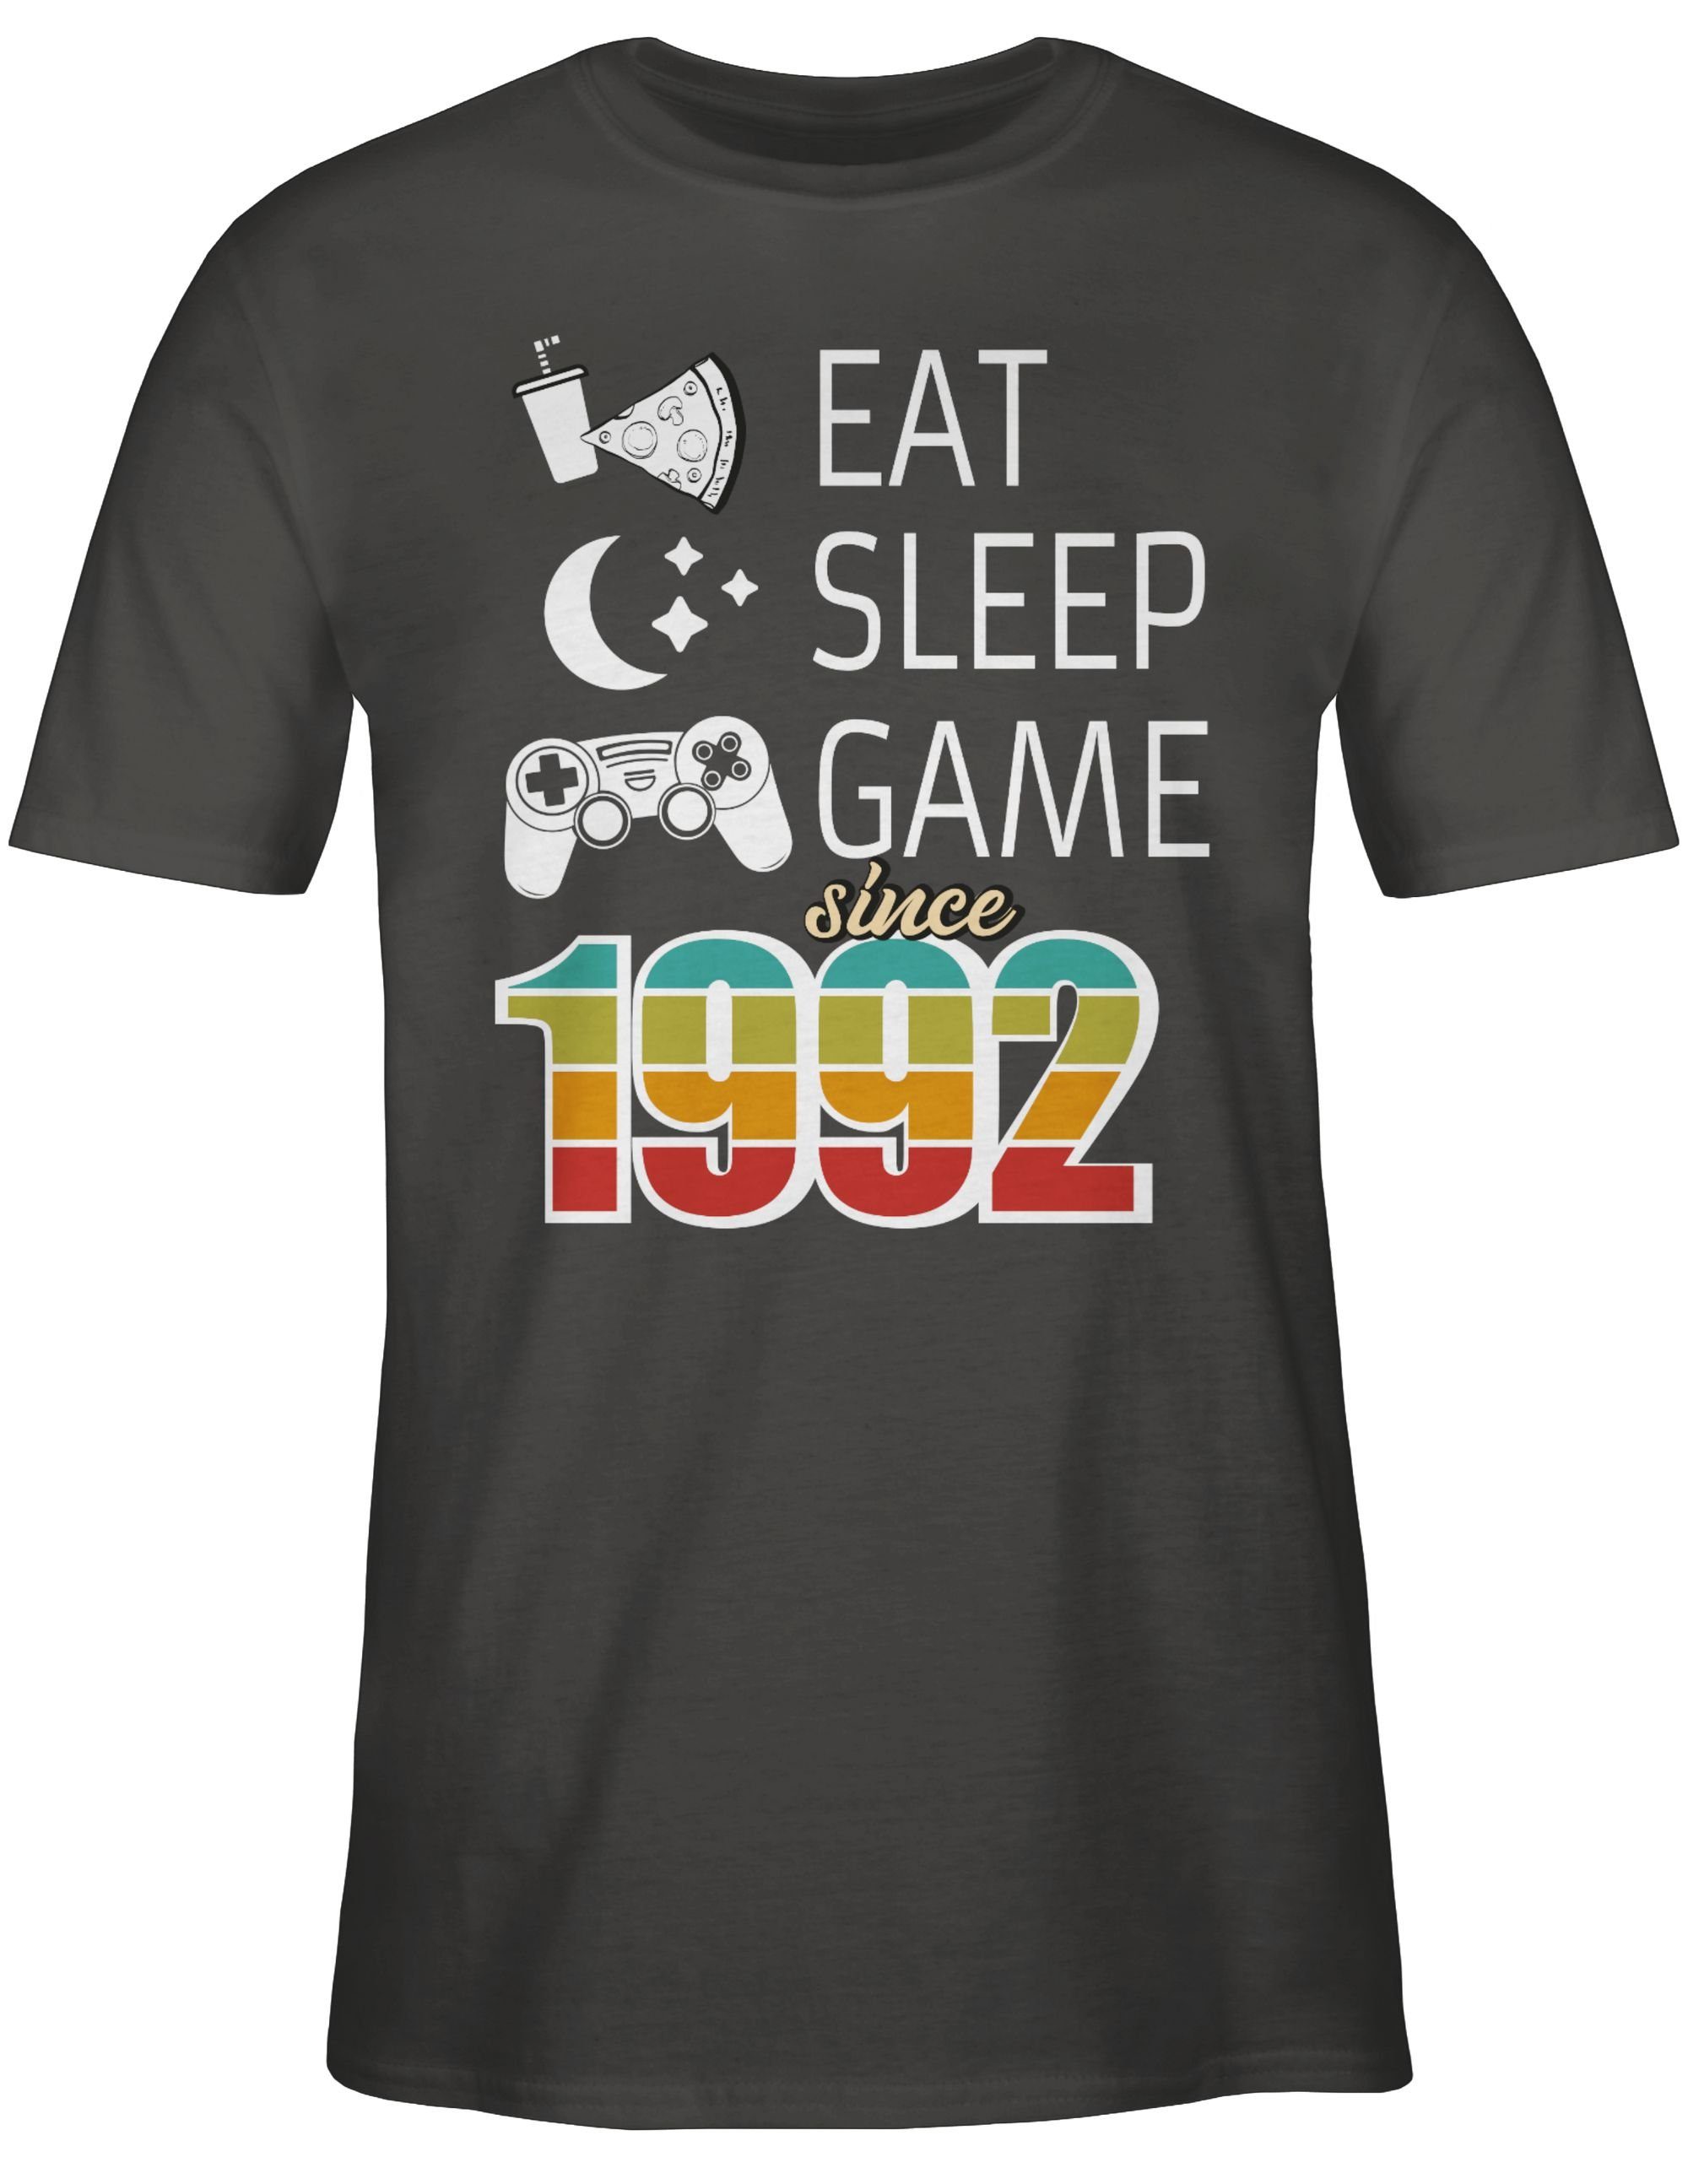 T-Shirt 03 Geburtstag since Game 1992 Eat 30. sleep Shirtracer Dunkelgrau